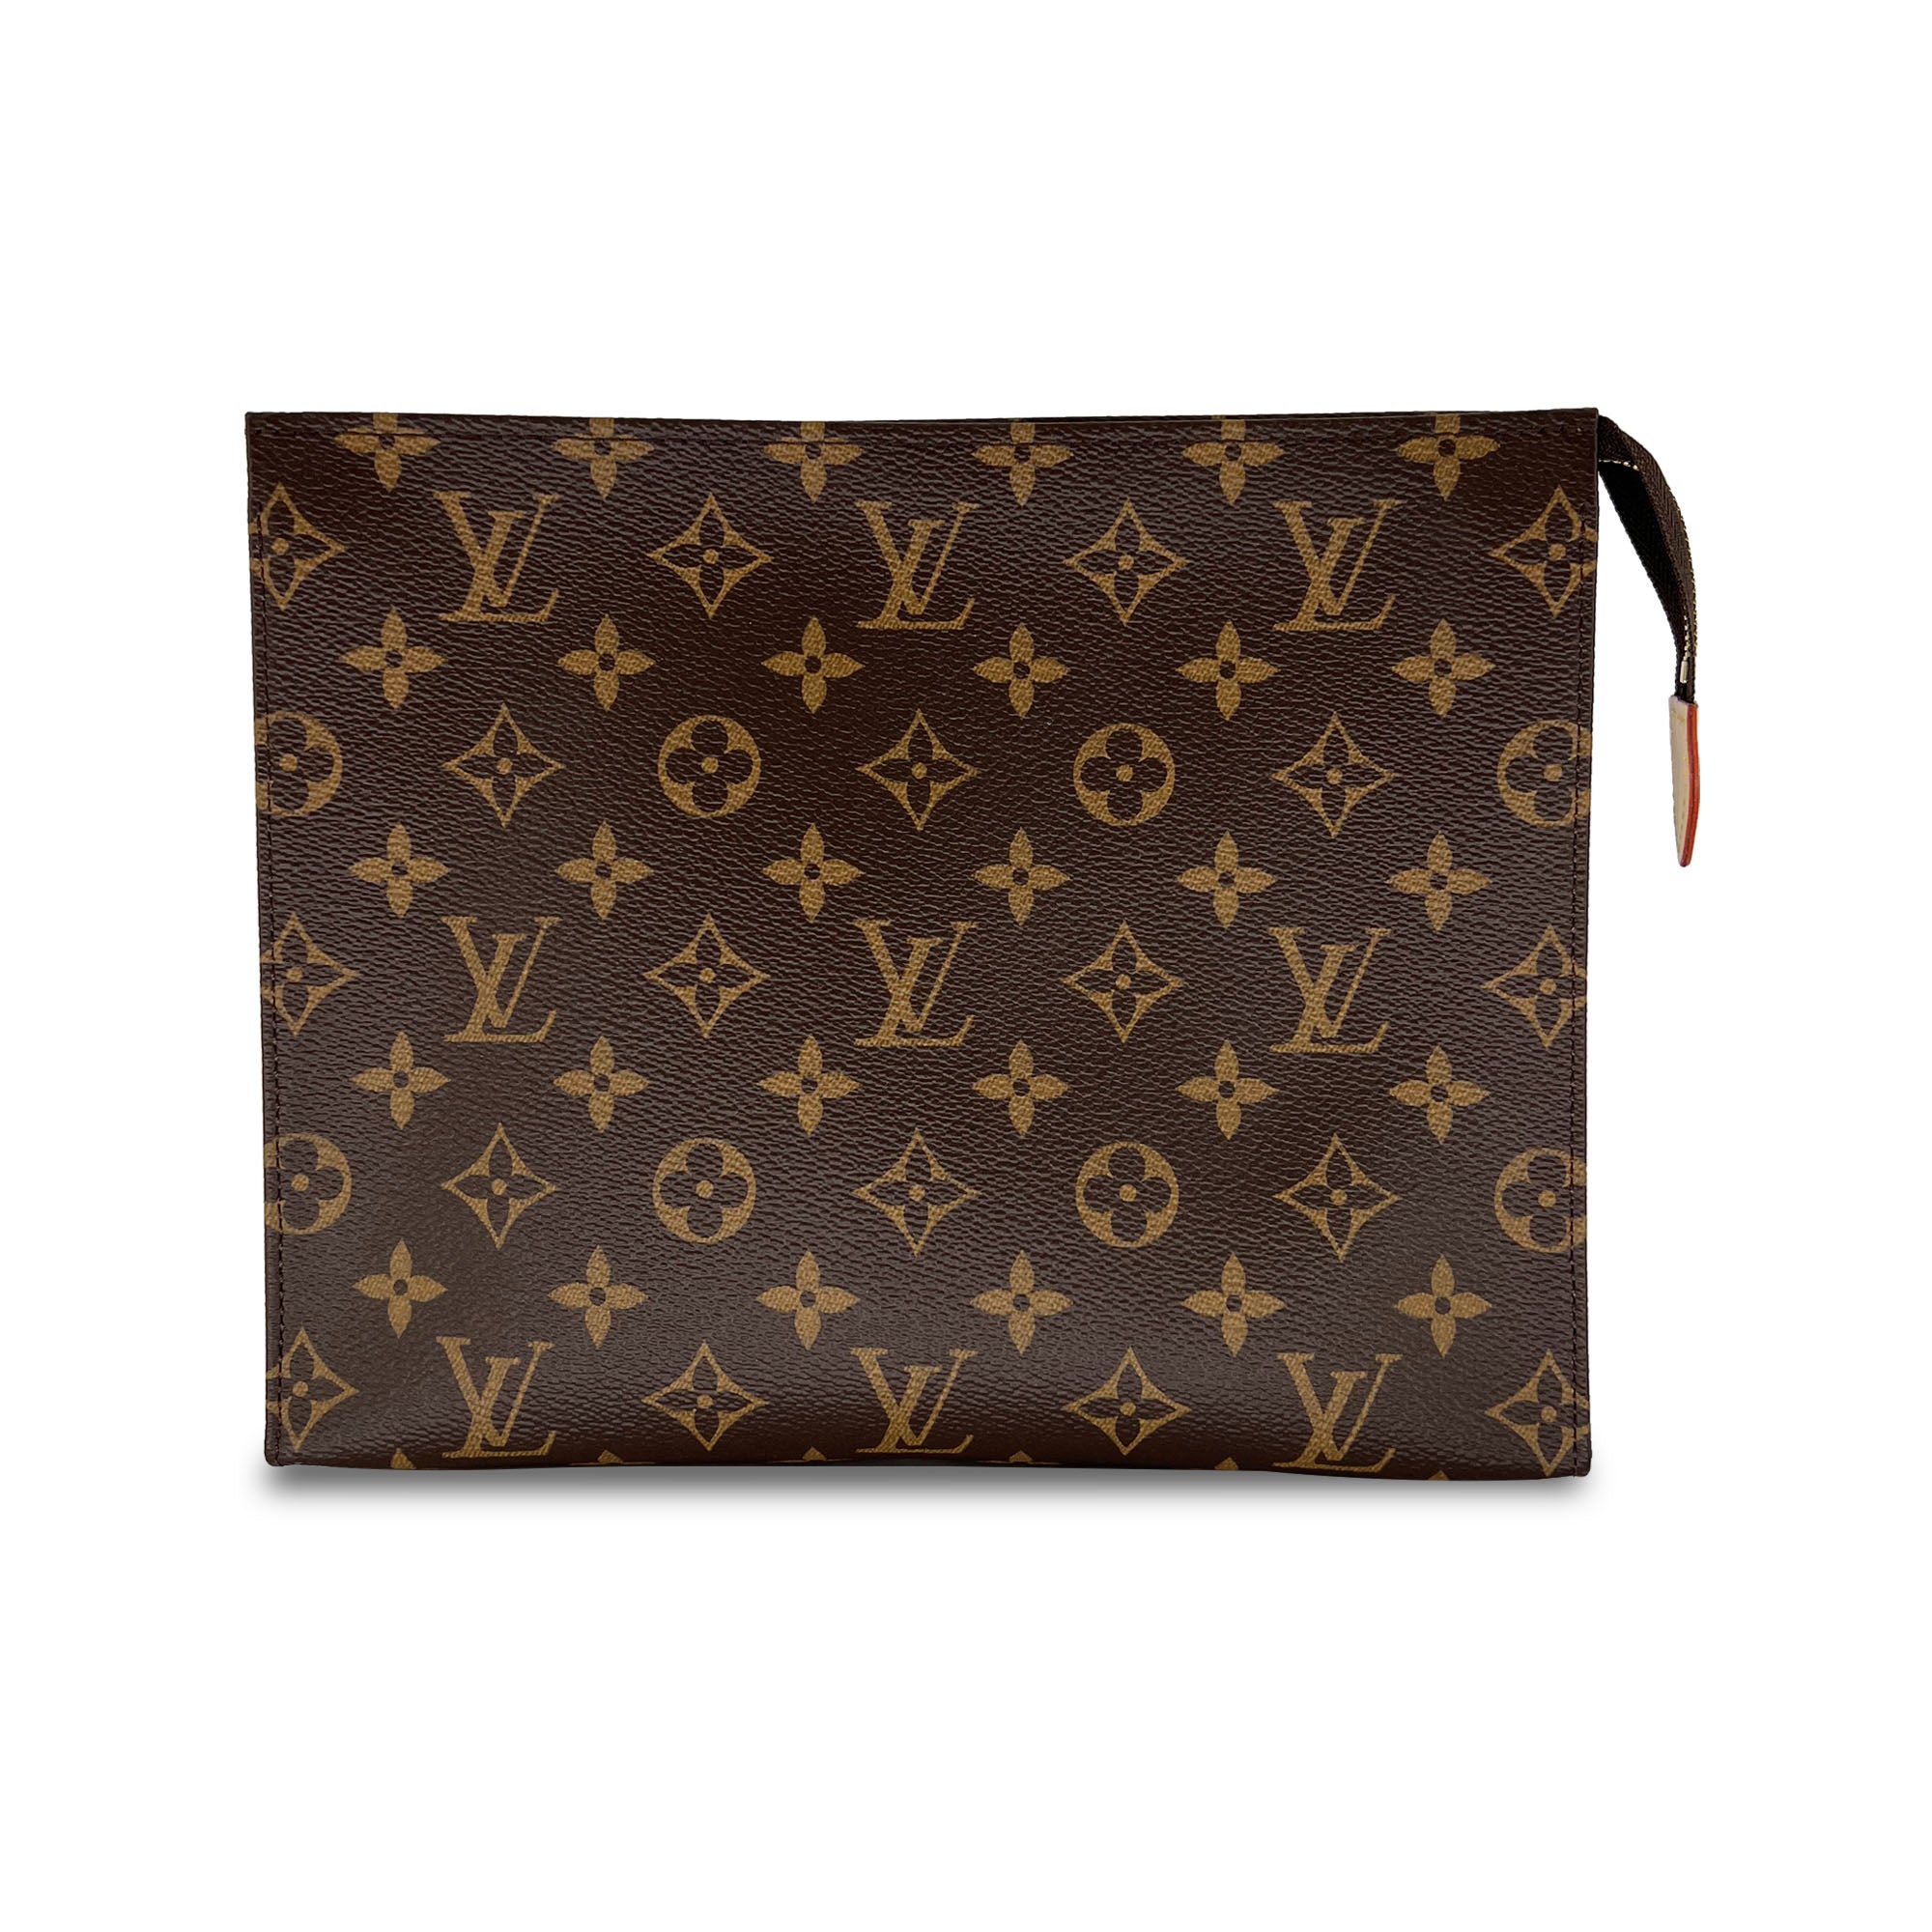 Louis Vuitton – VintageBooBoo Pre owned designer bags, shoes, clothes